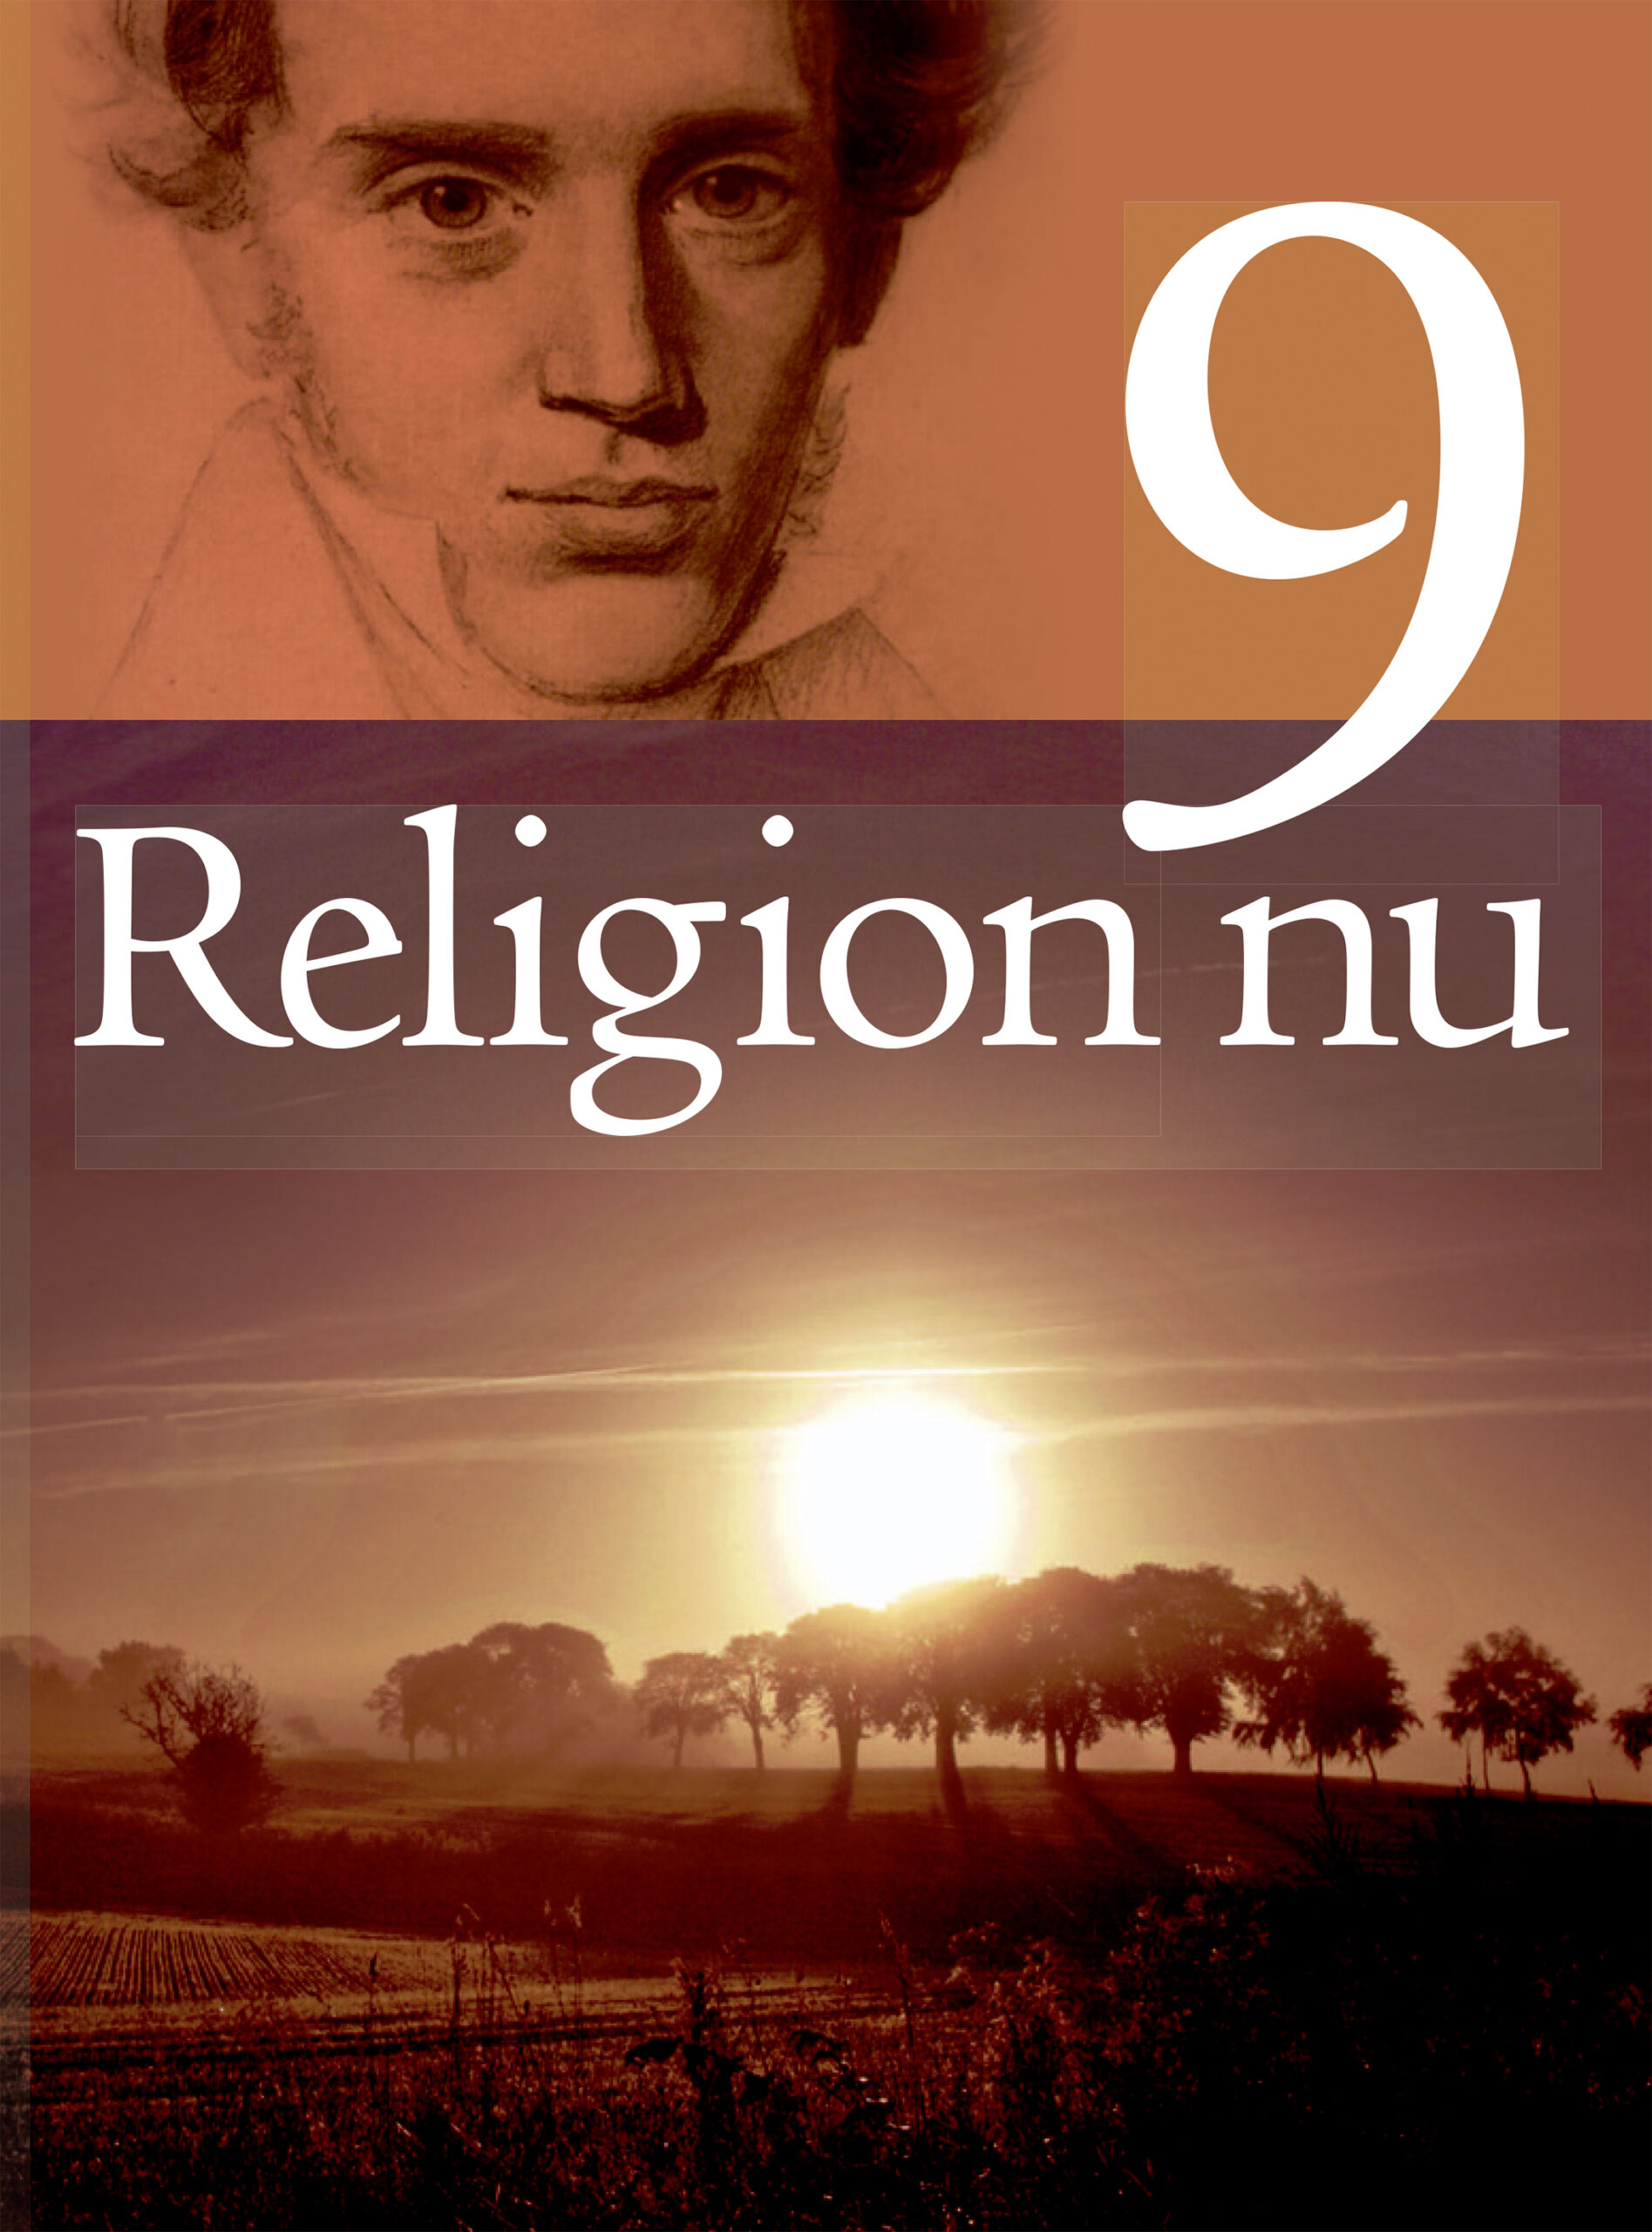 Religion nu 9